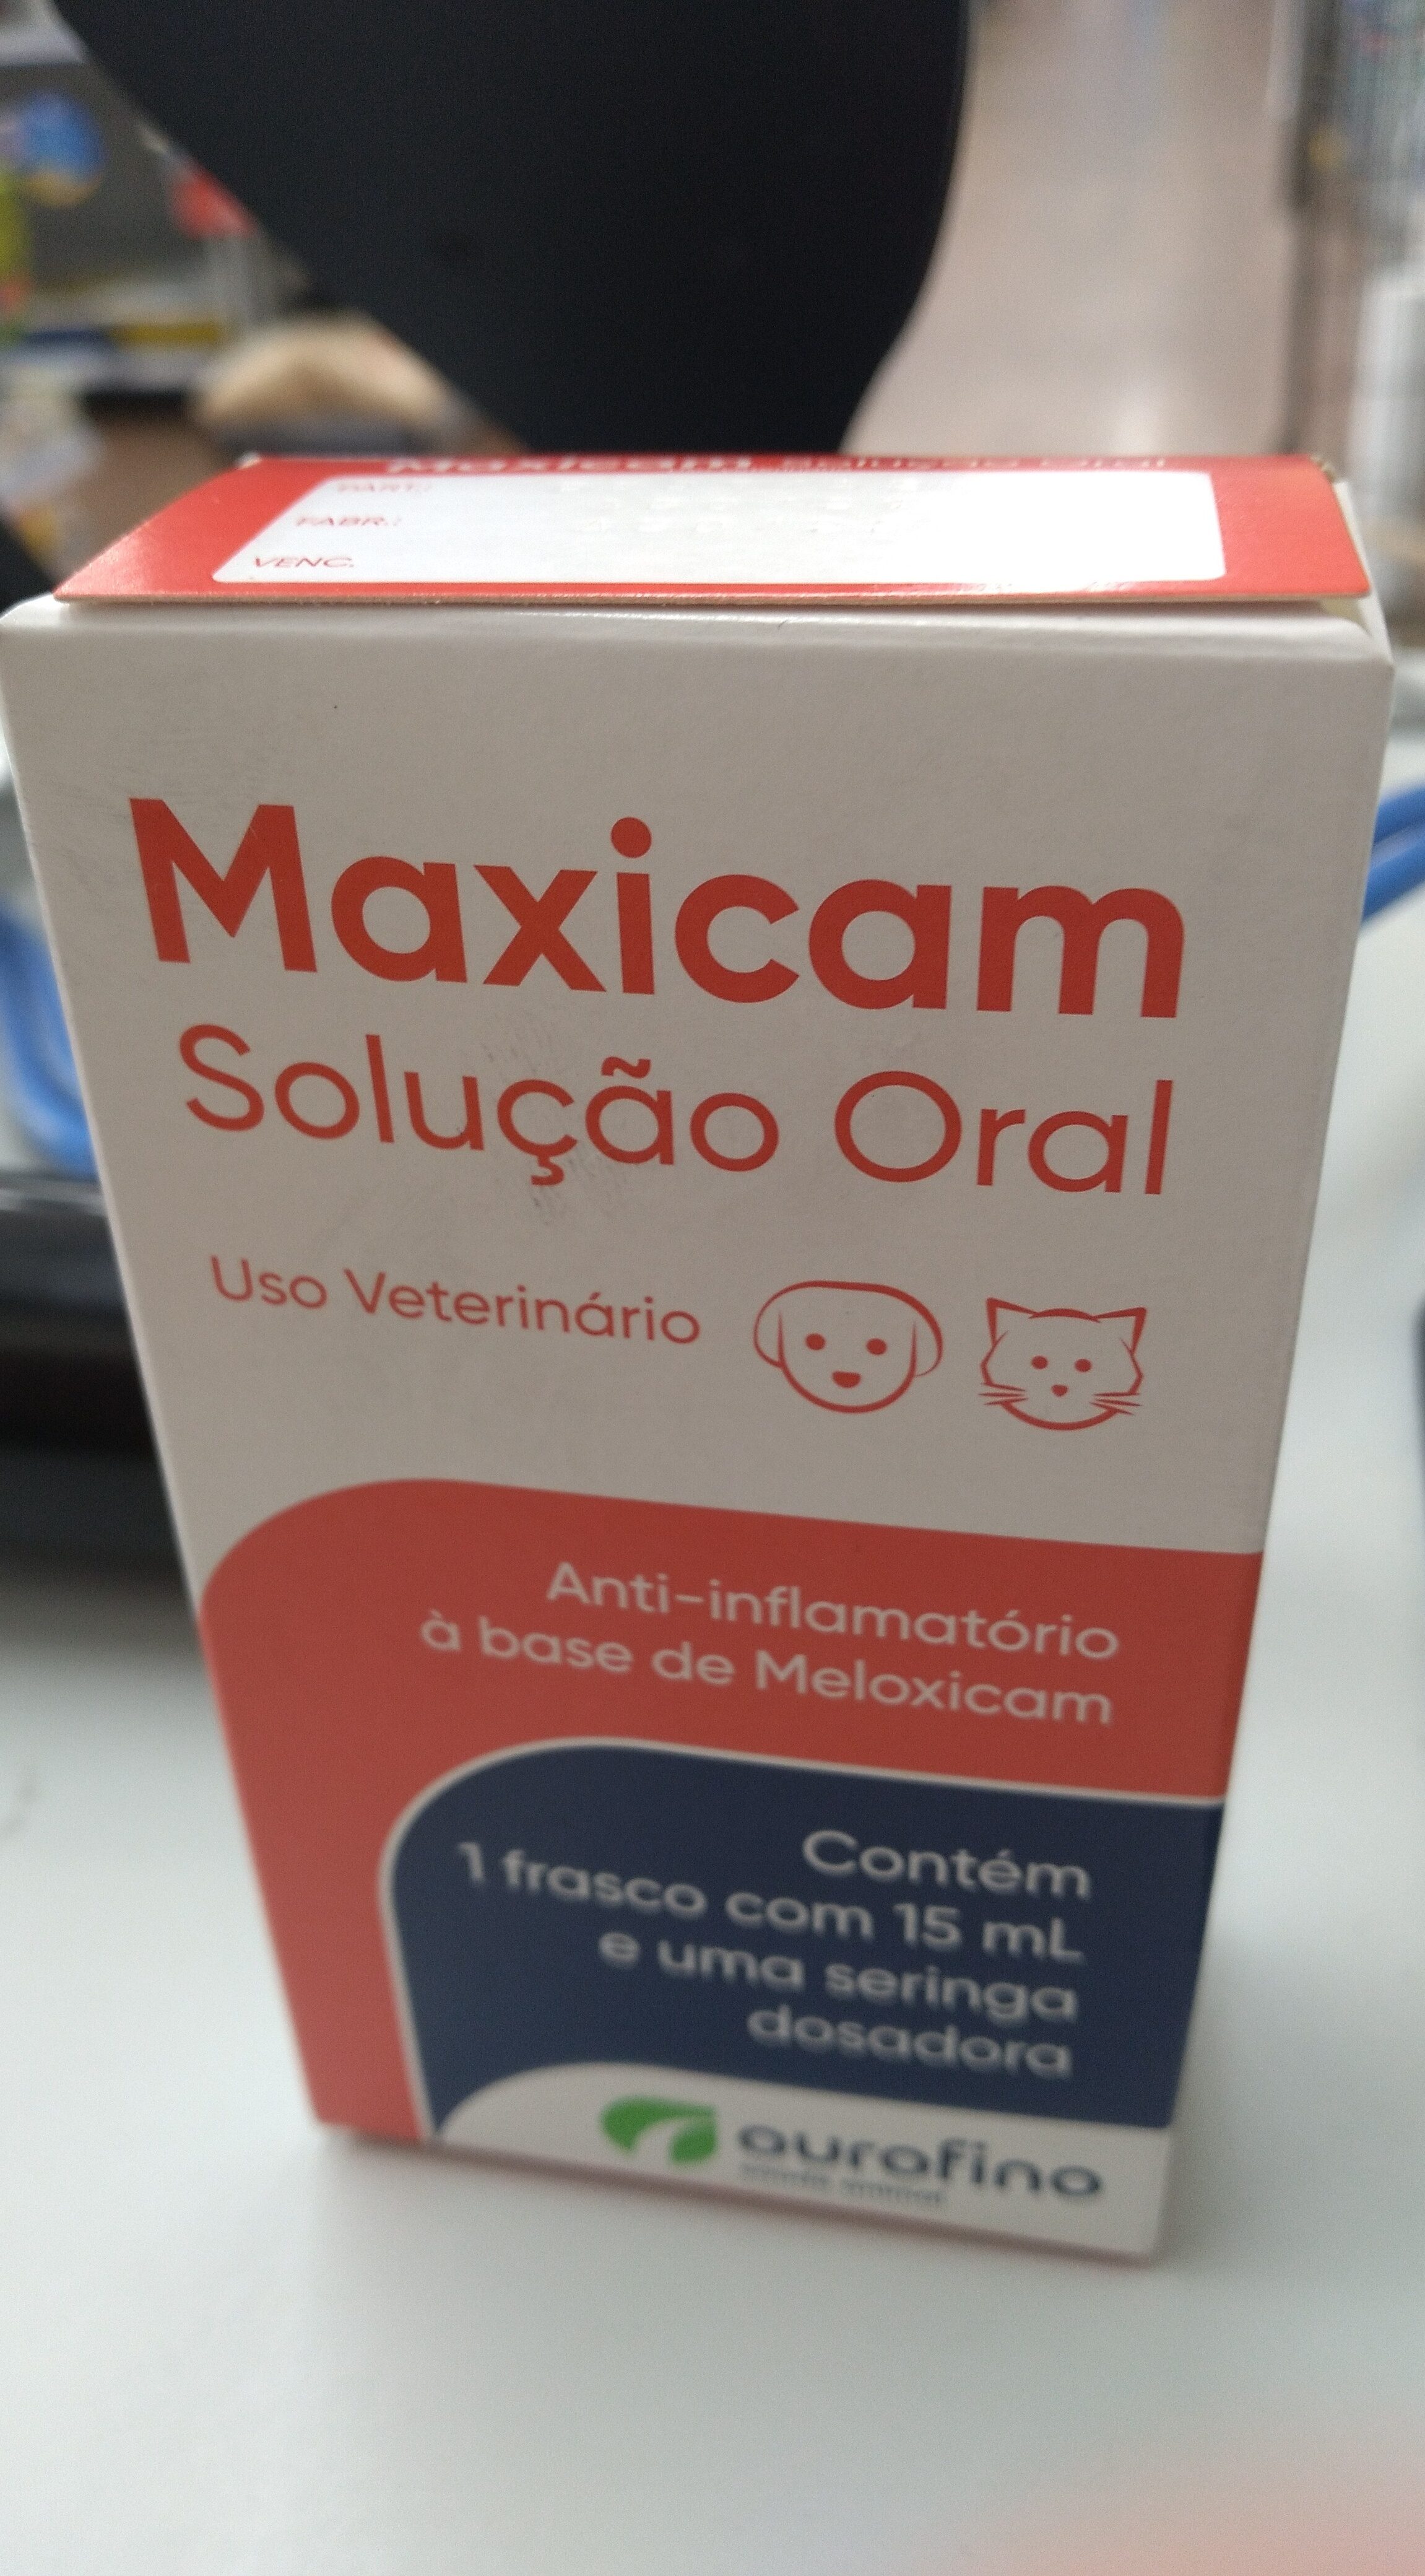 Med. Maxicam 15ml - Product - pt